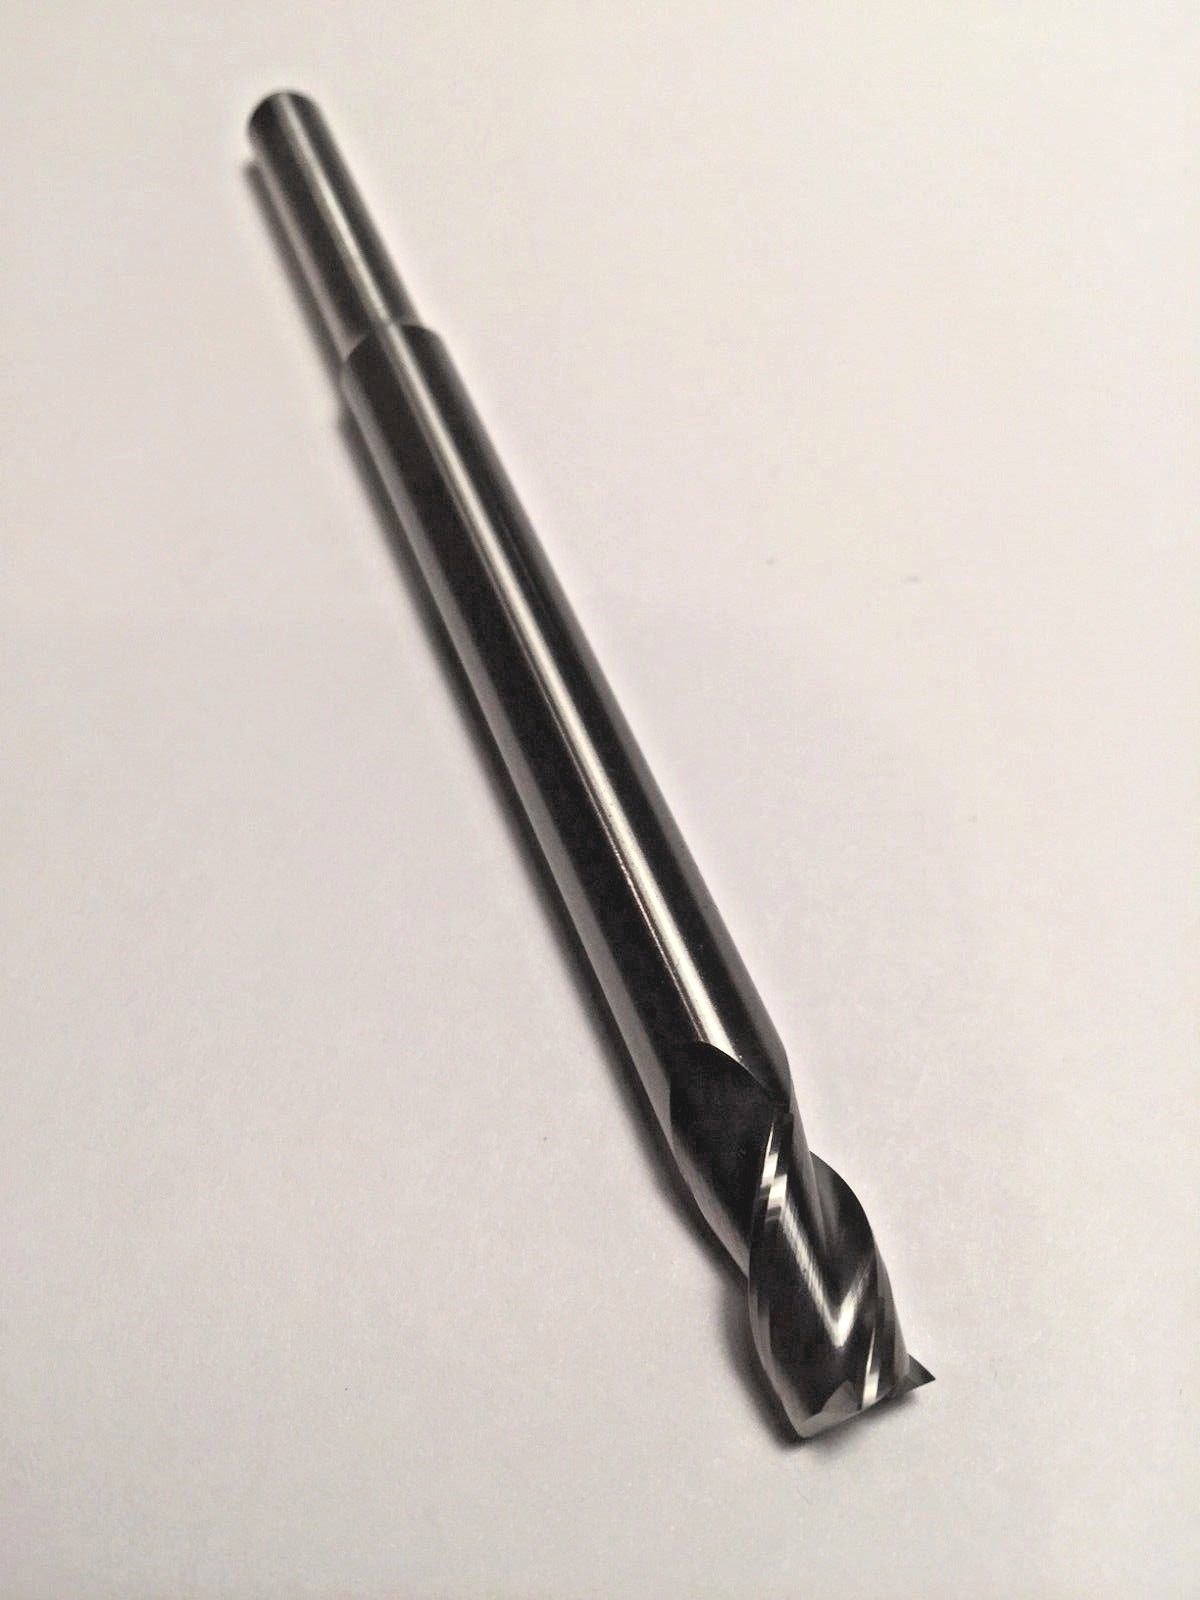 .3125 5/16 3 Flute Long Length Carbide END Mill 5/16 x 5/16 x 1 x 4